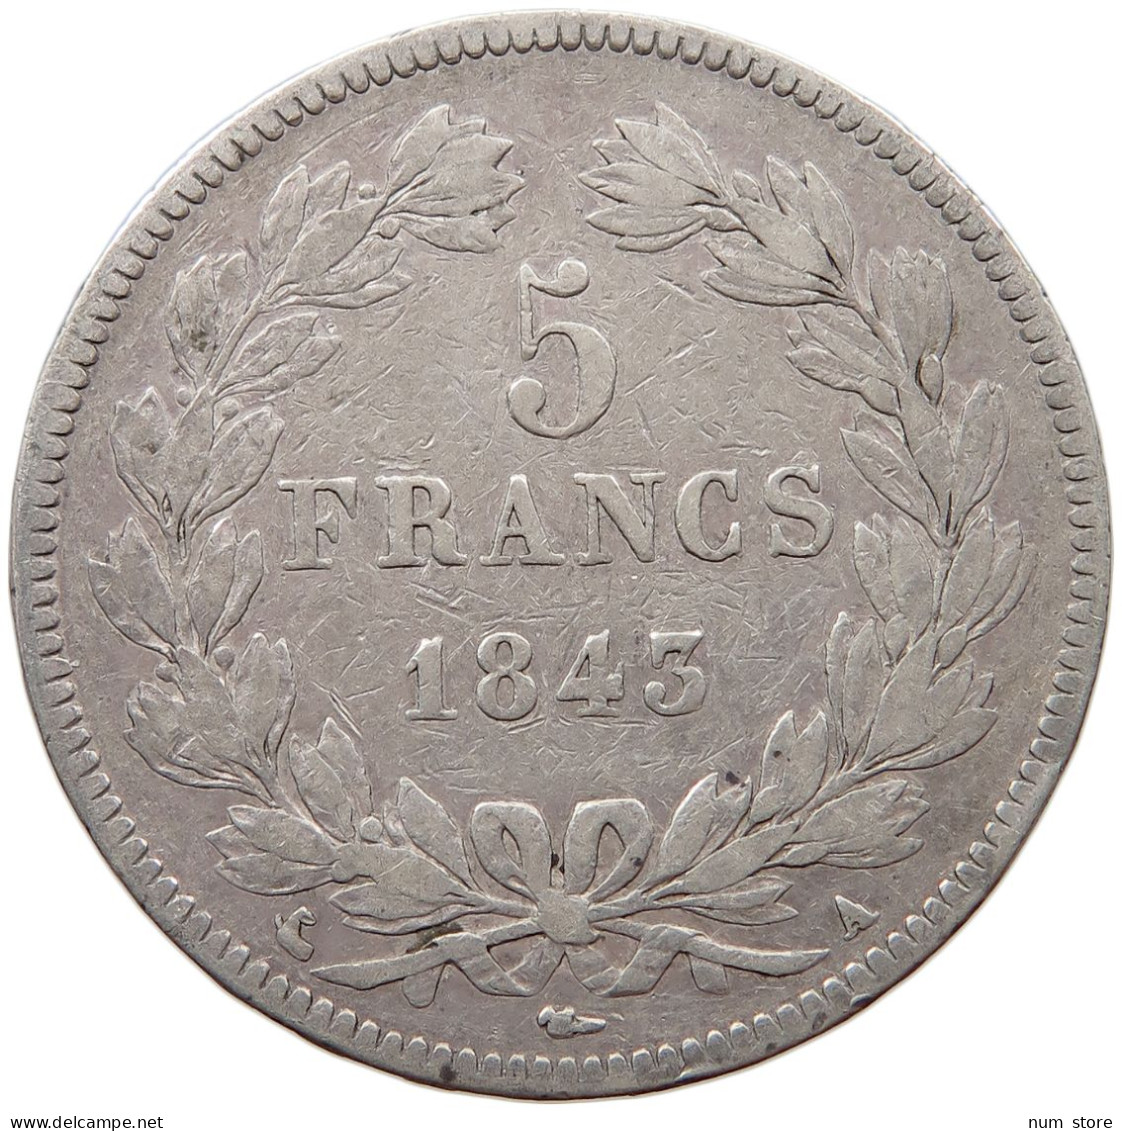 FRANCE 5 FRANCS 1843 A LOUIS PHILIPPE I. (1830-1848) #c057 0361 - 5 Francs